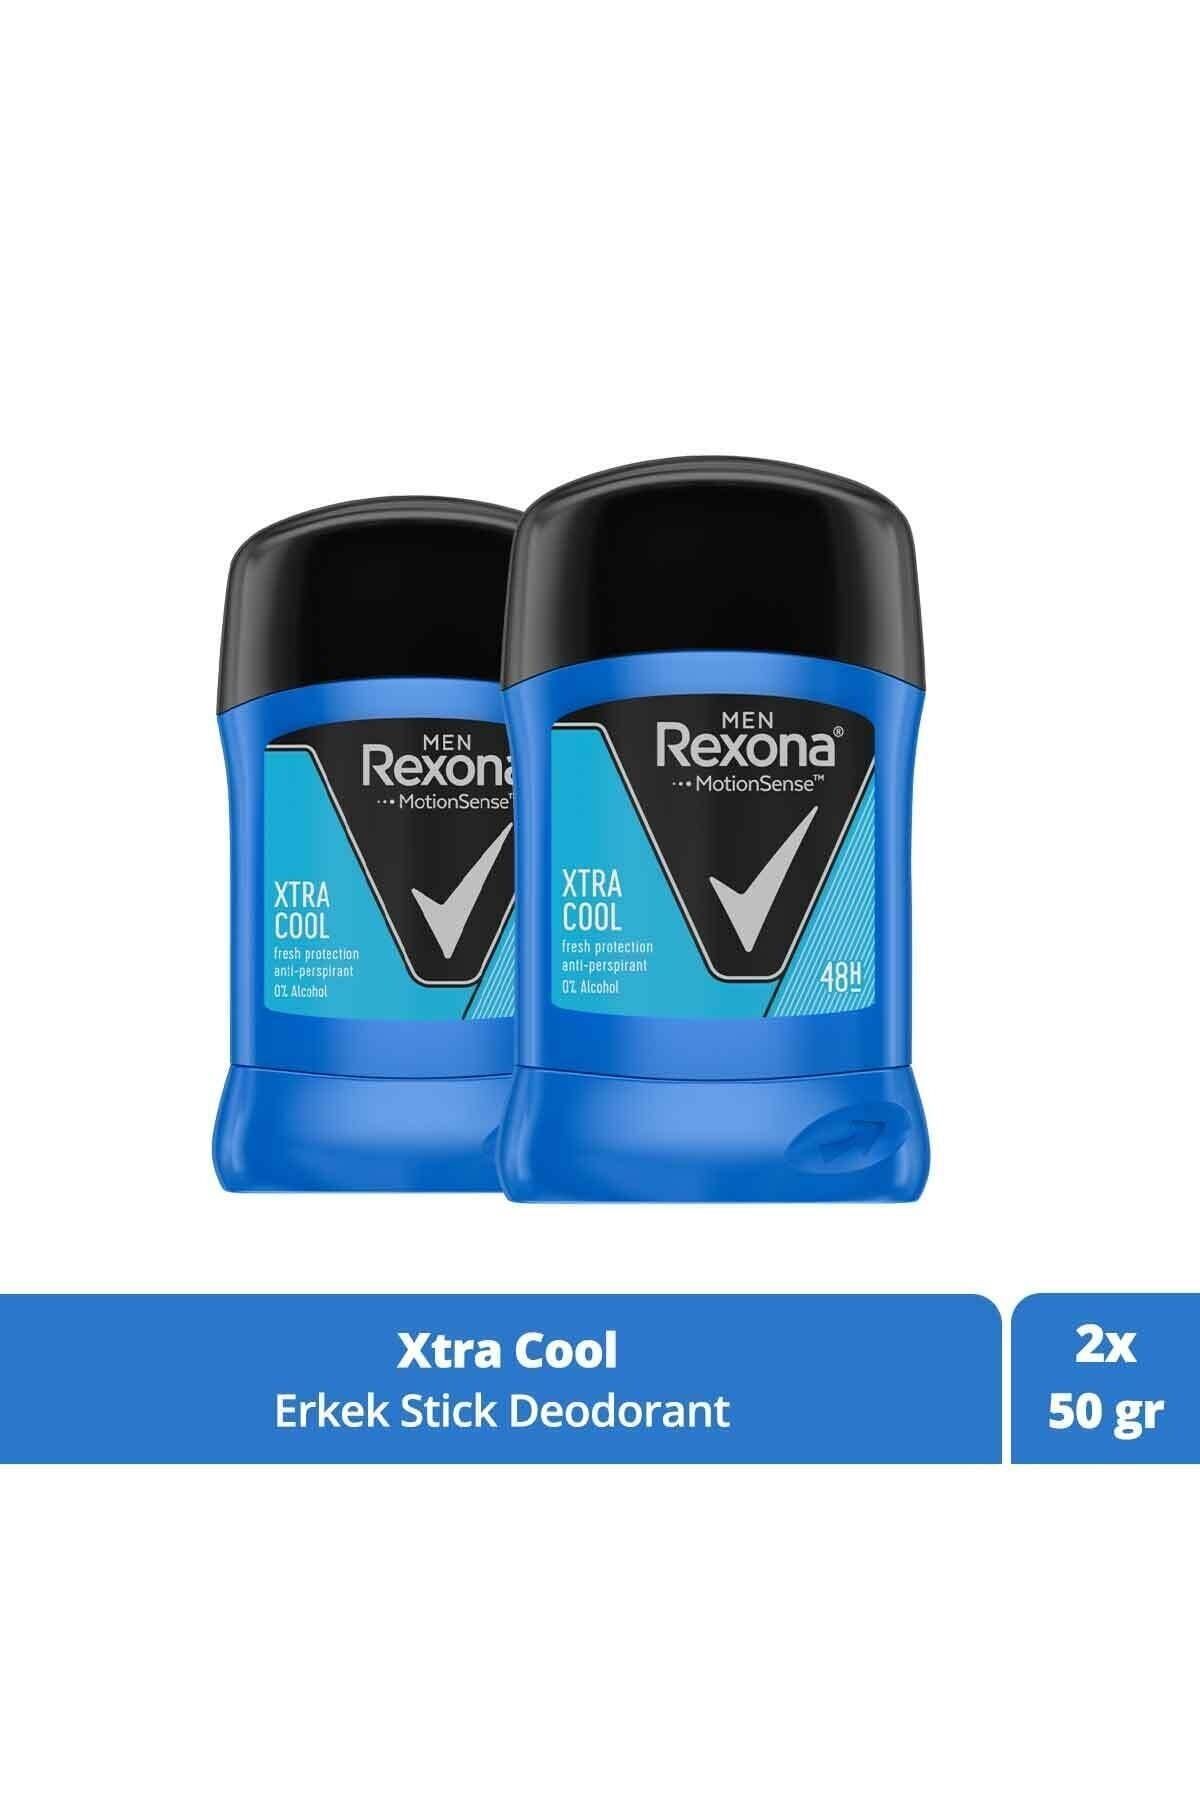 Rexona Men Motion Sense Erkek Stick Deodorant Xtra Cool 48 Saat Koruma 50 g X 2 Adet